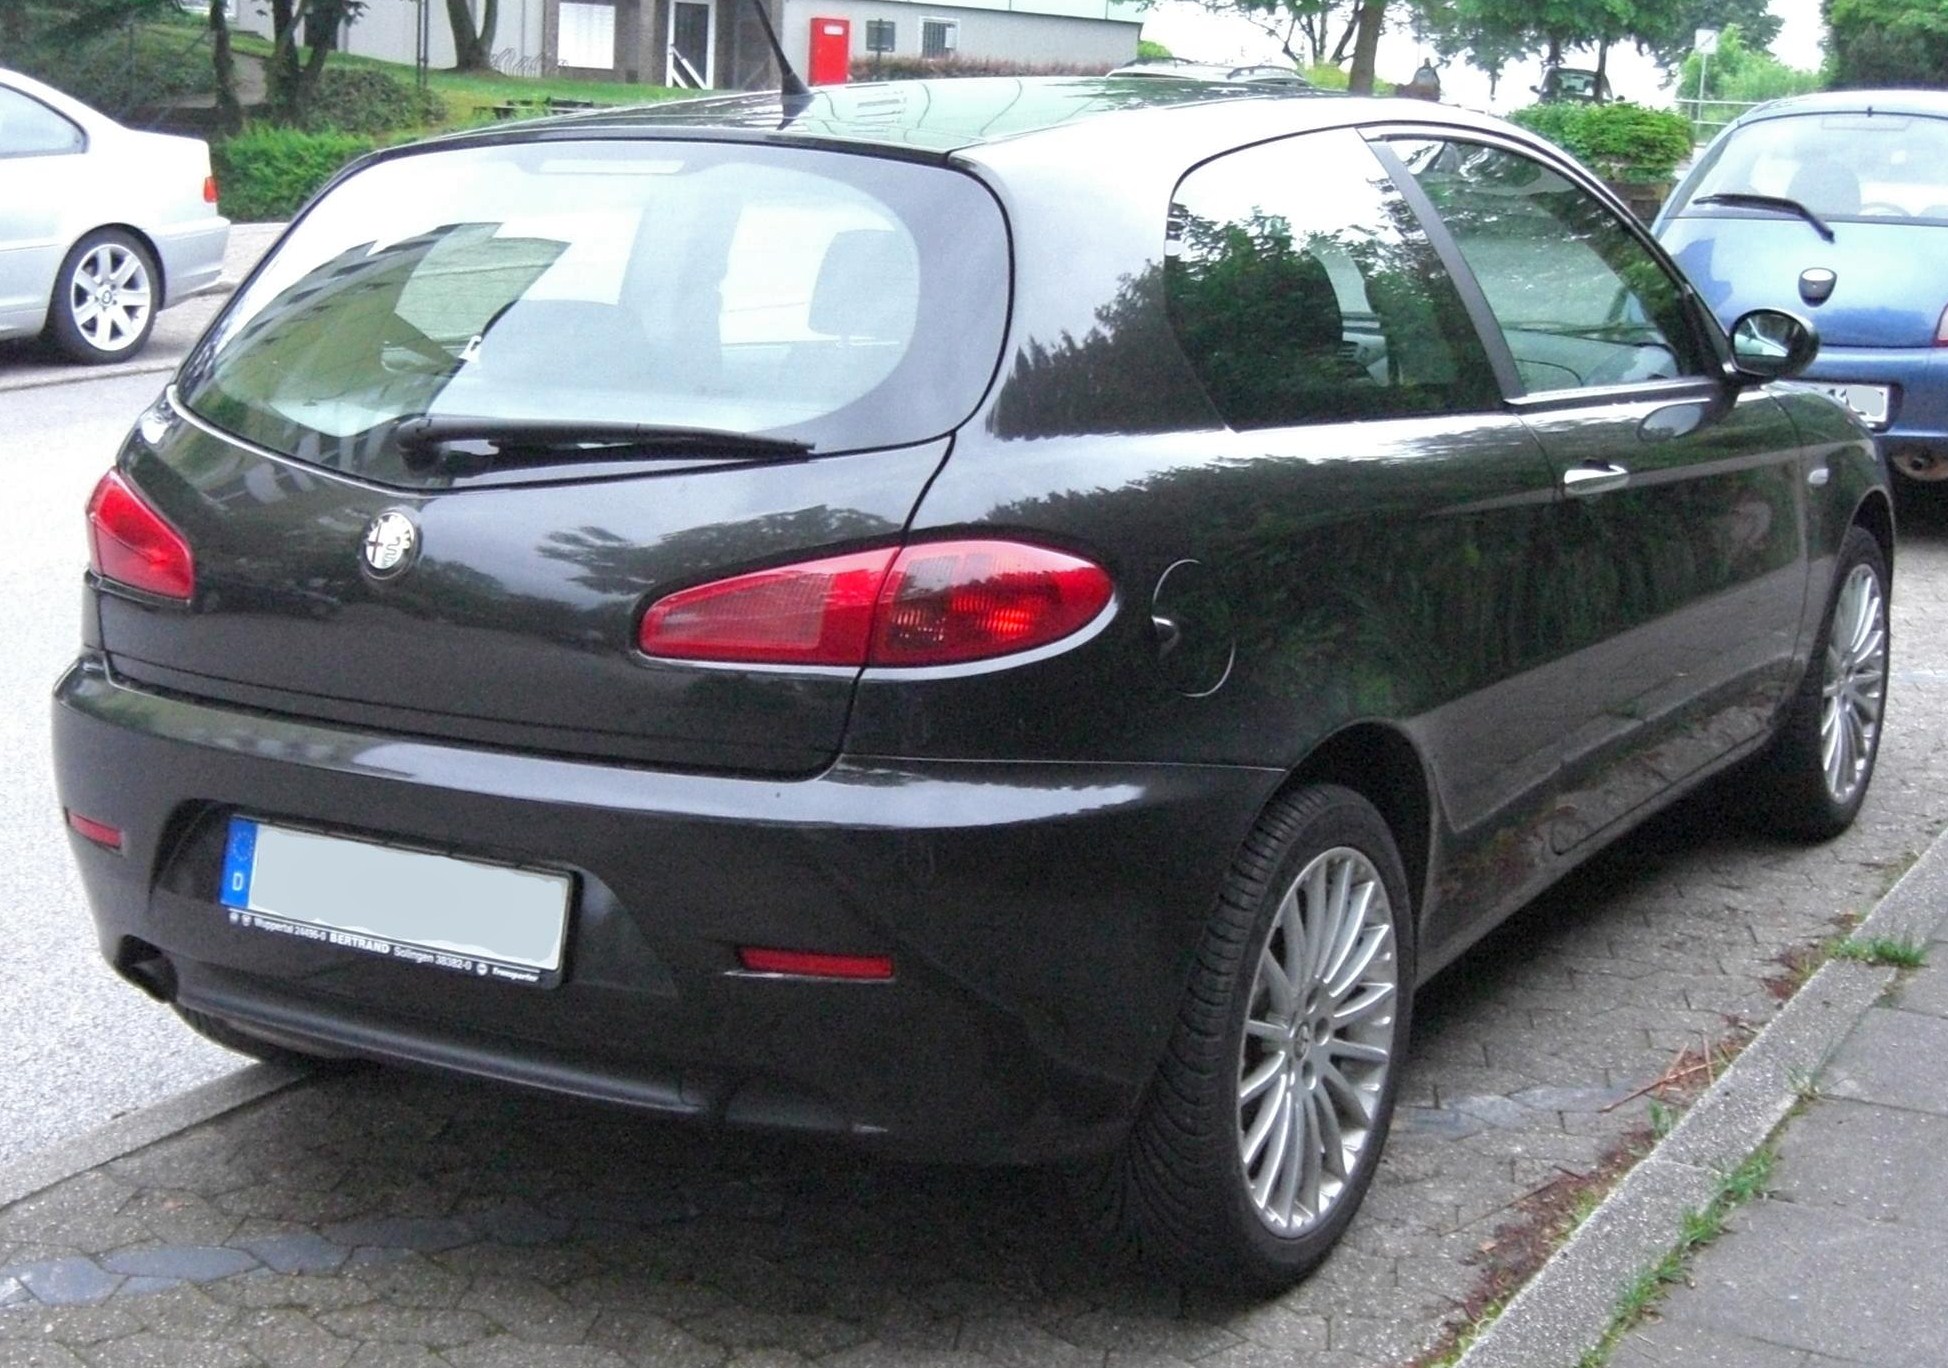 File:Alfa 147 rear.jpg - Wikimedia Commons